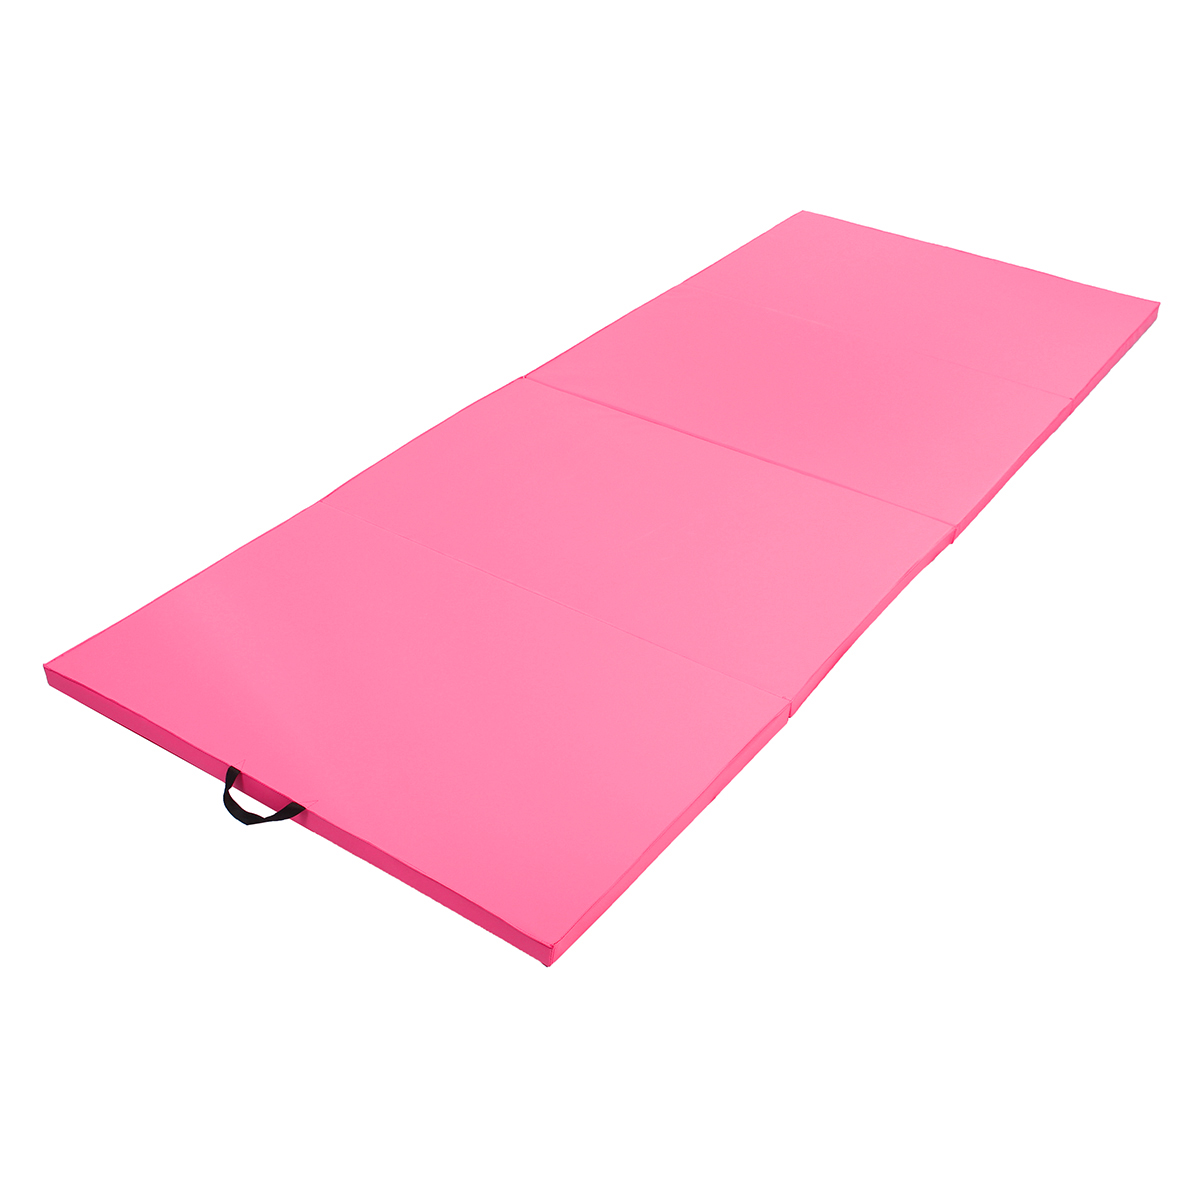 118x47x196inch-4-Folding-Super-Large-Gymnastics-Mat-Yoga-Gym-Exercise-Pad-Pink-1246274-6